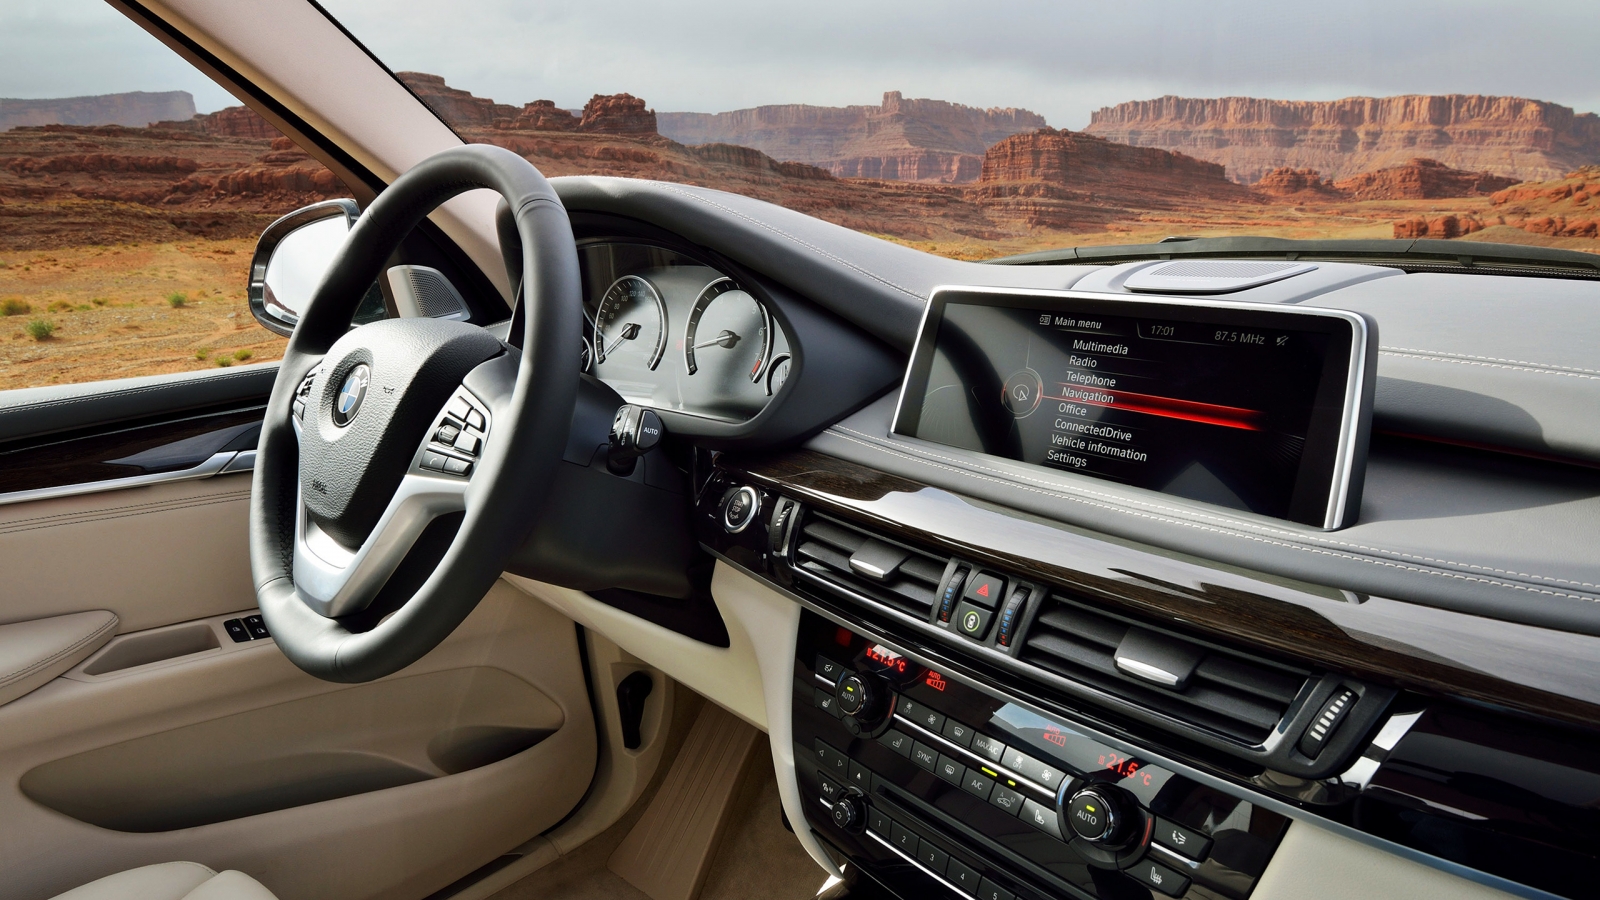 BMW X5 2014 Dashboard for 1600 x 900 HDTV resolution